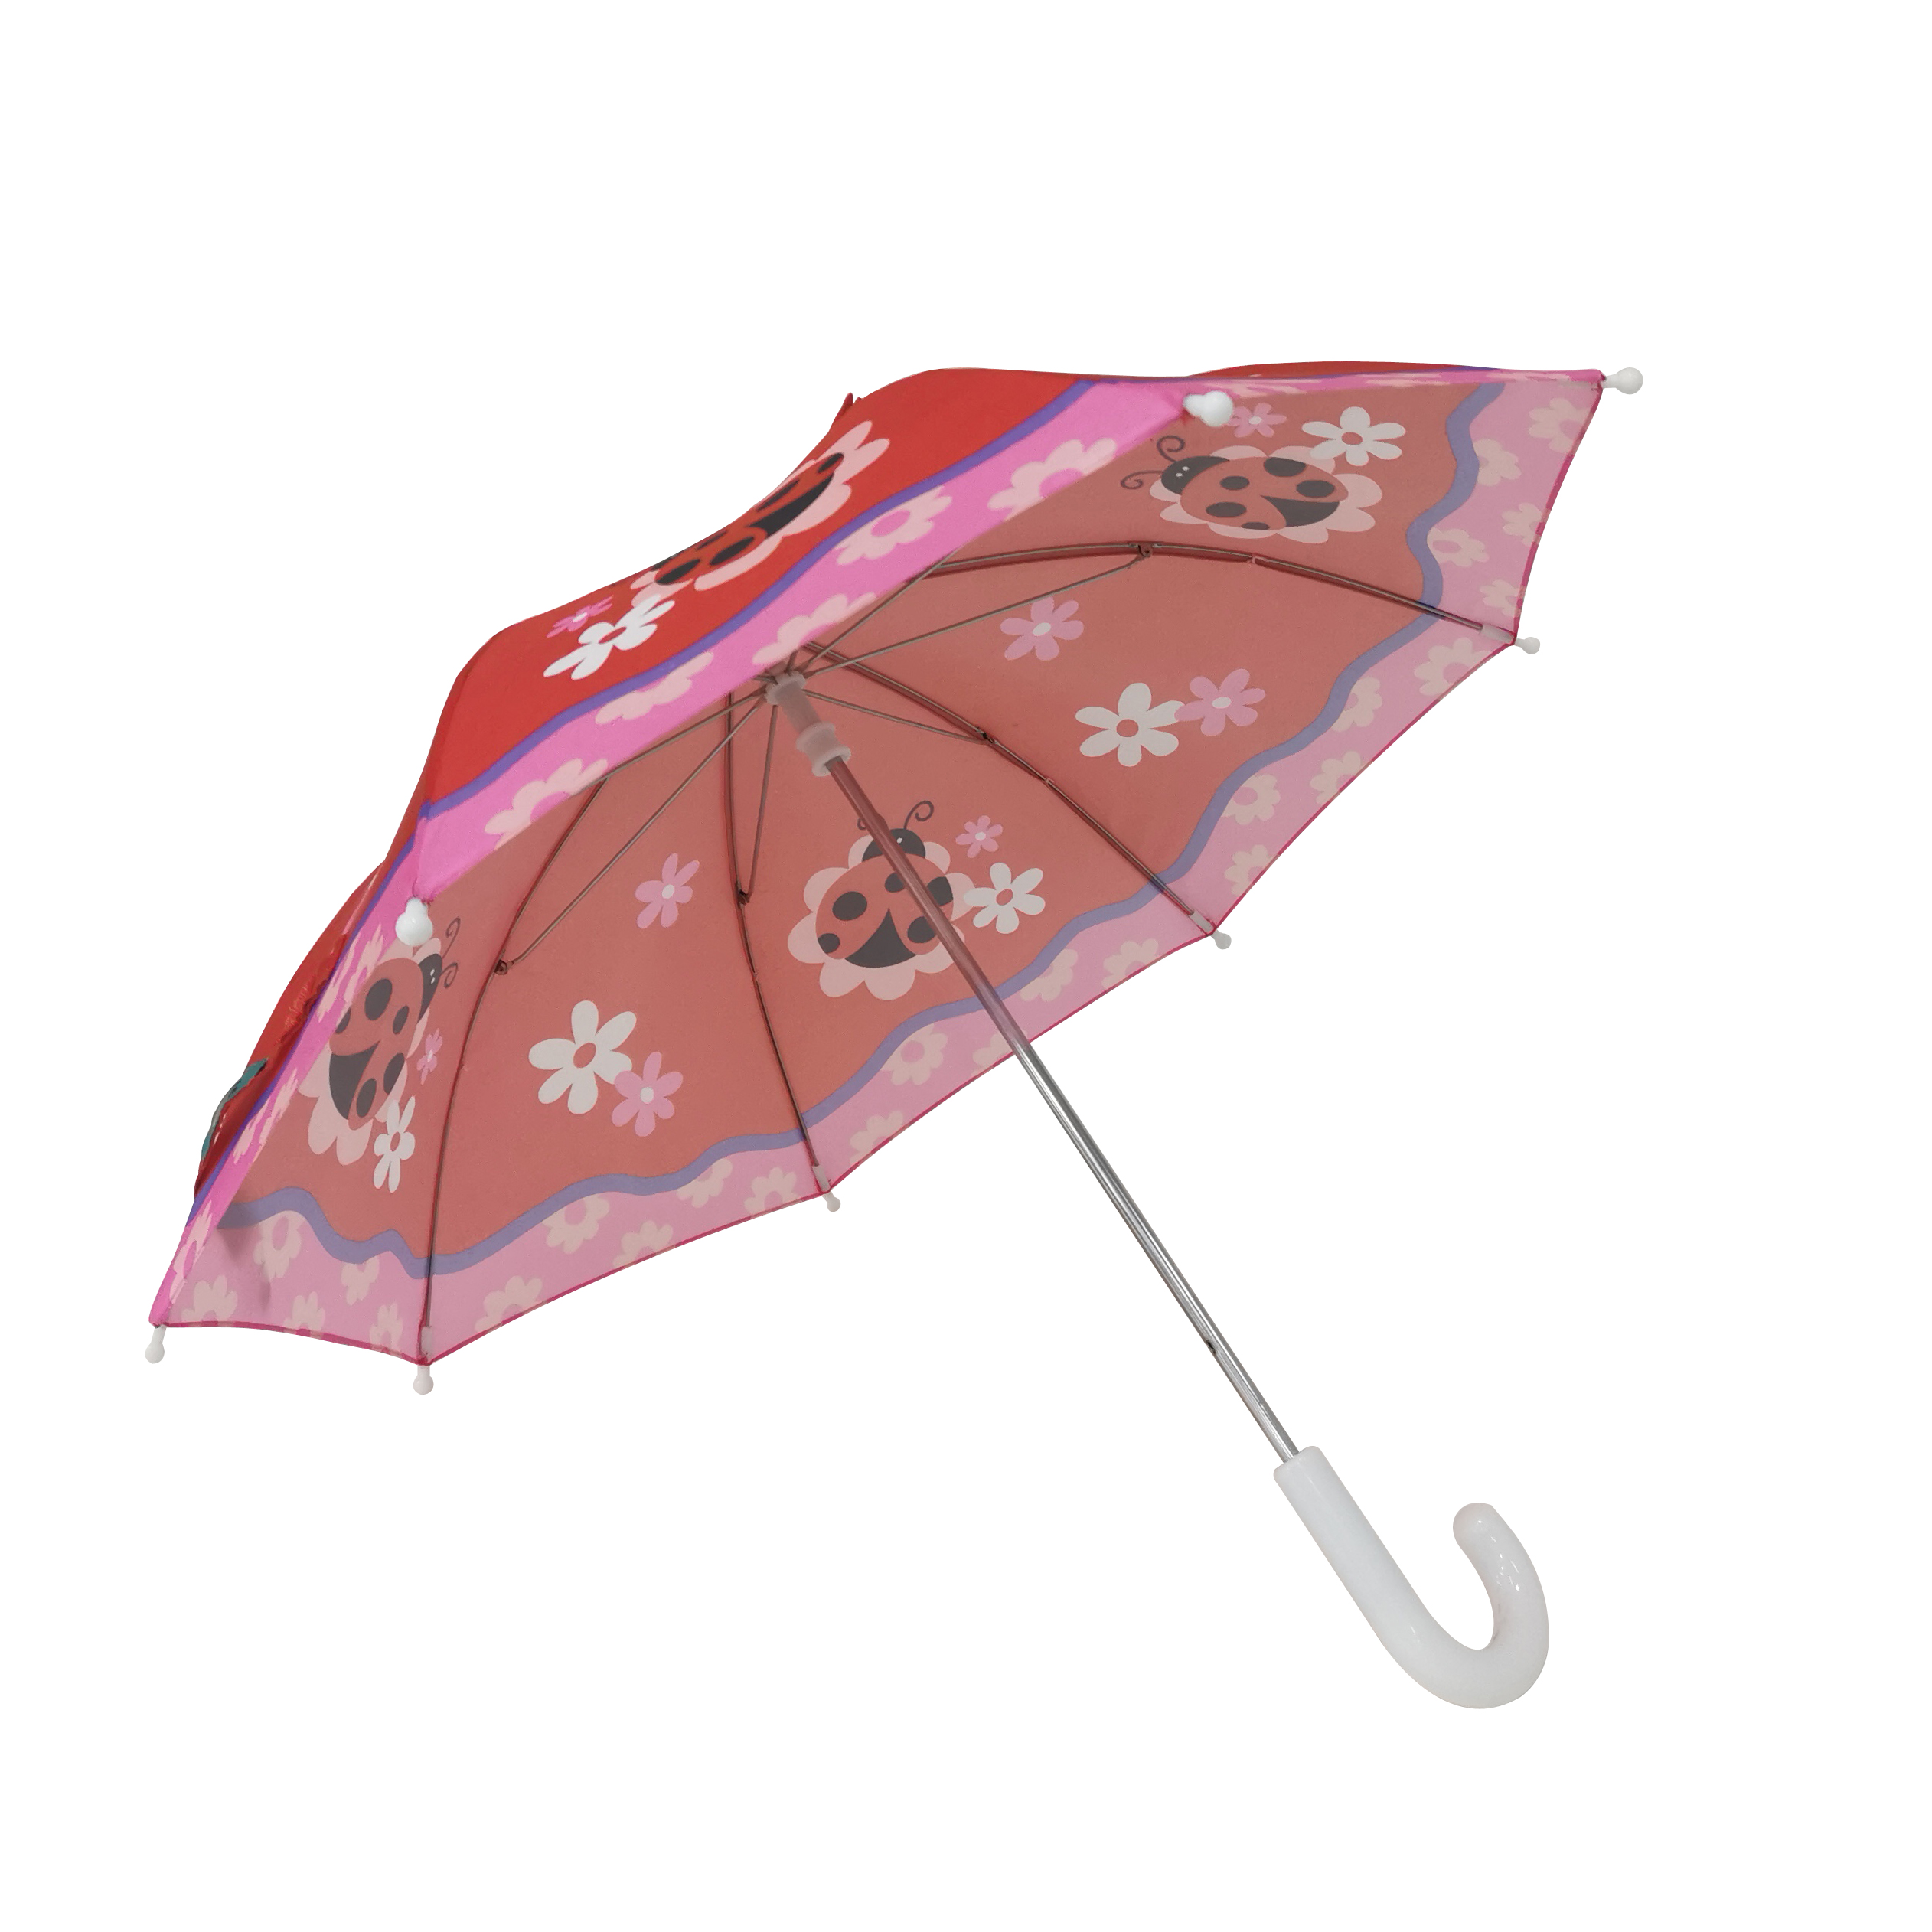 https://www.hodaumbrella.com/children-umbrella-with-ears-product/